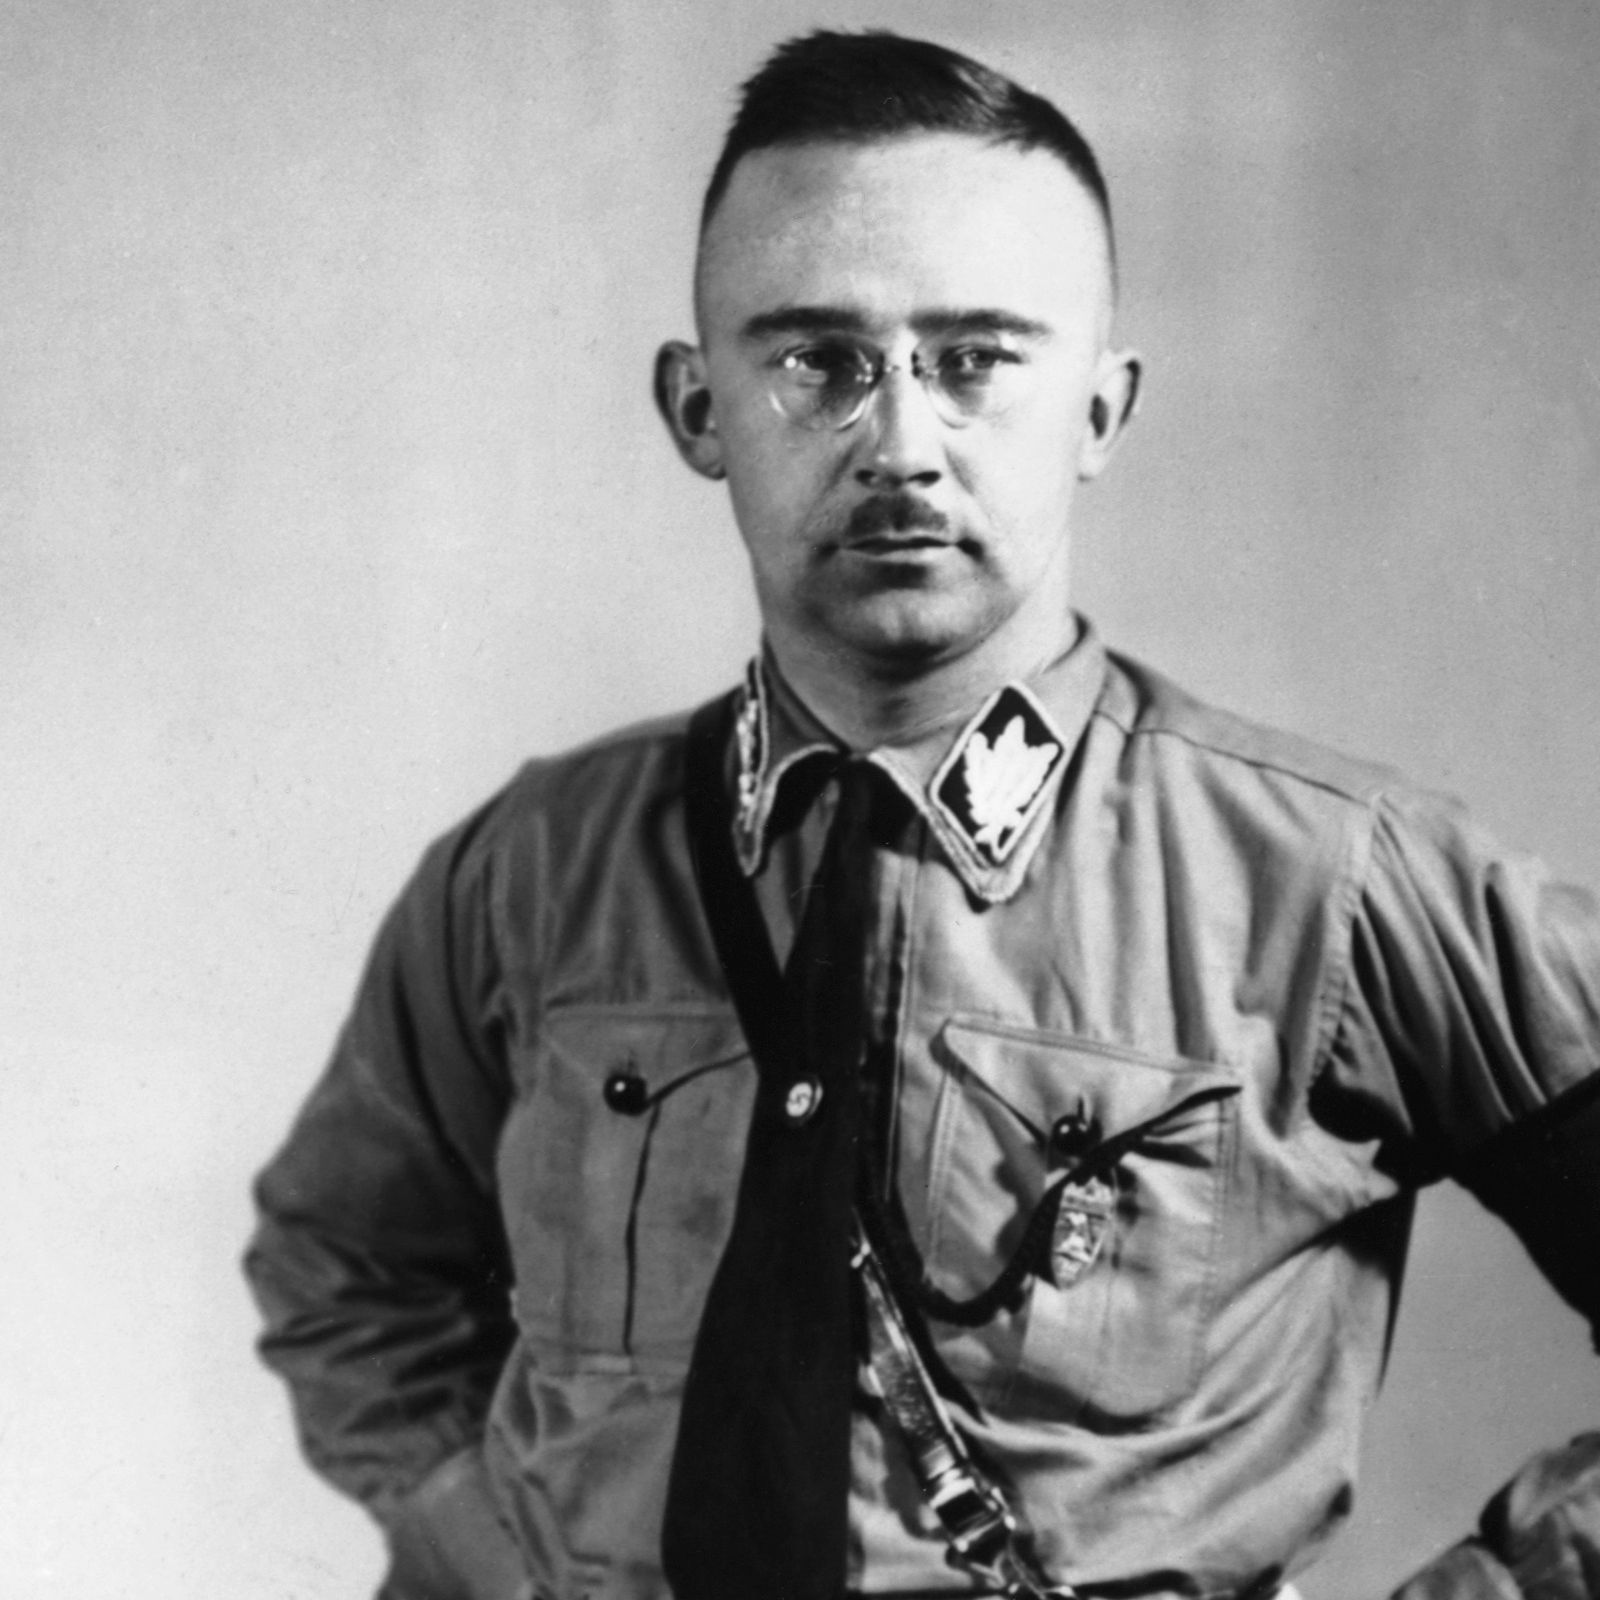 Himmler-portrait-2400-3x2gty-55c79ad4816b4e1d88f63285d3684423.jpg